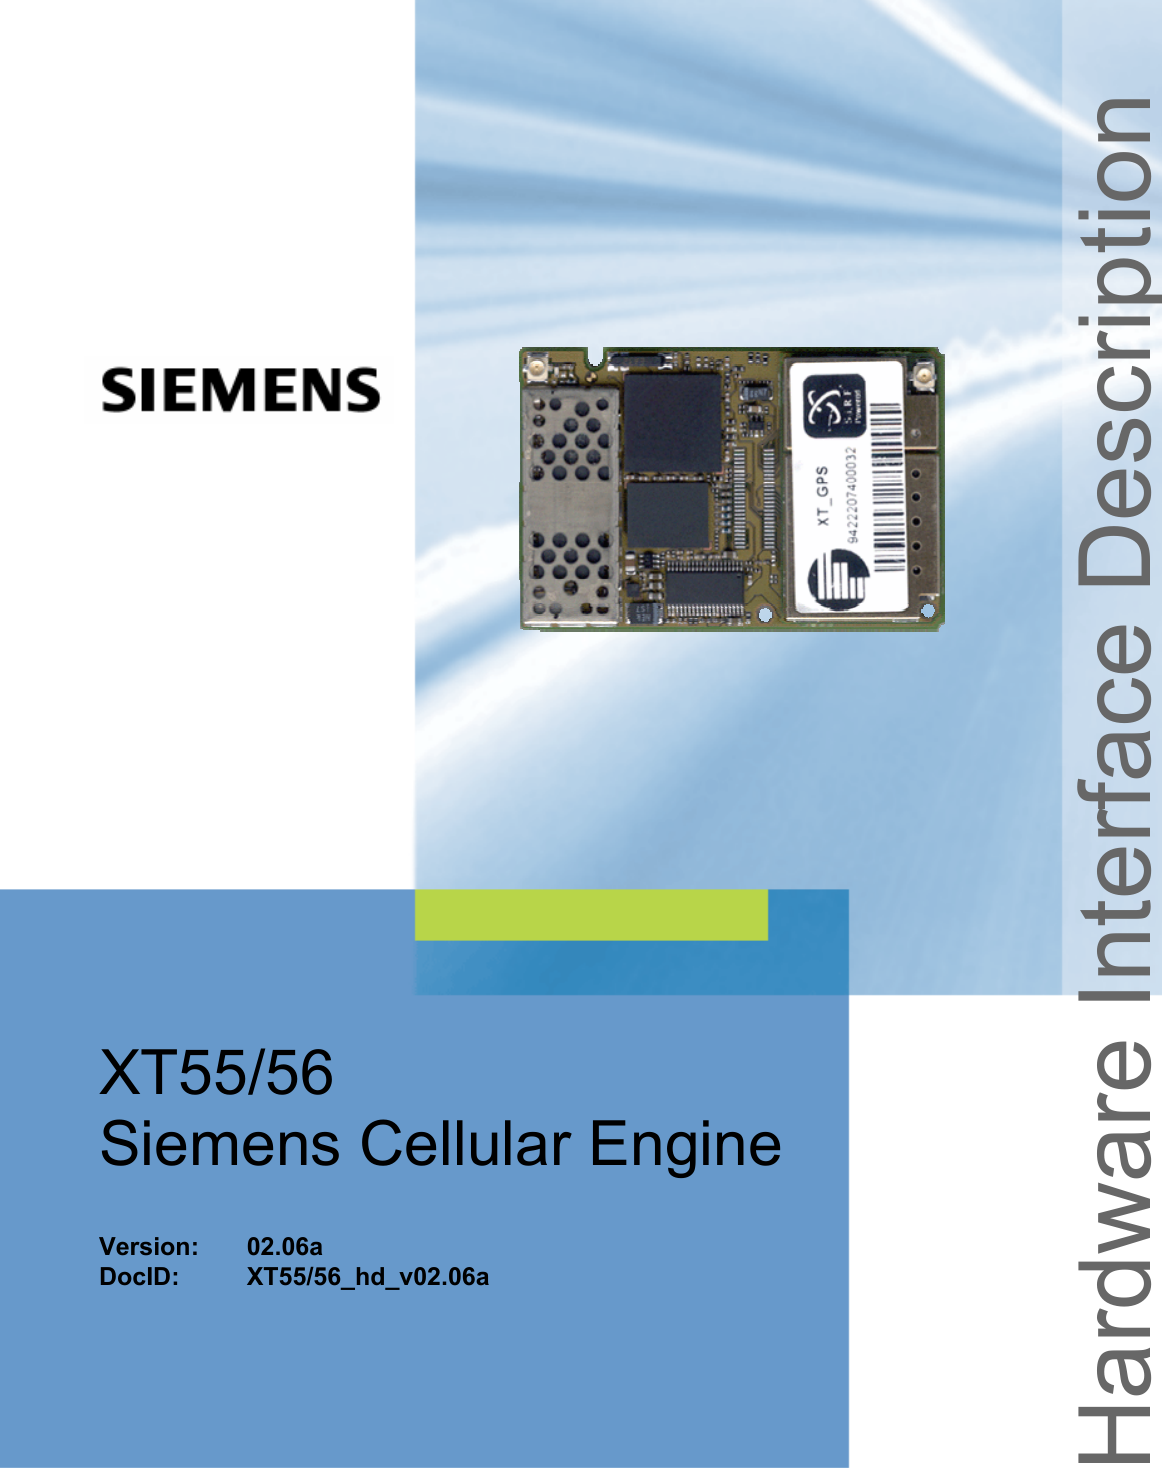 XT55/56 Hardware Interface Description Confidential / Released s XT55/56_hd_v02.06a  Page 1 of 125  17.12.2004  Hardware Interface Description XT55/56 Siemens Cellular Engine   Version: 02.06a DocID: XT55/56_hd_v02.06a 